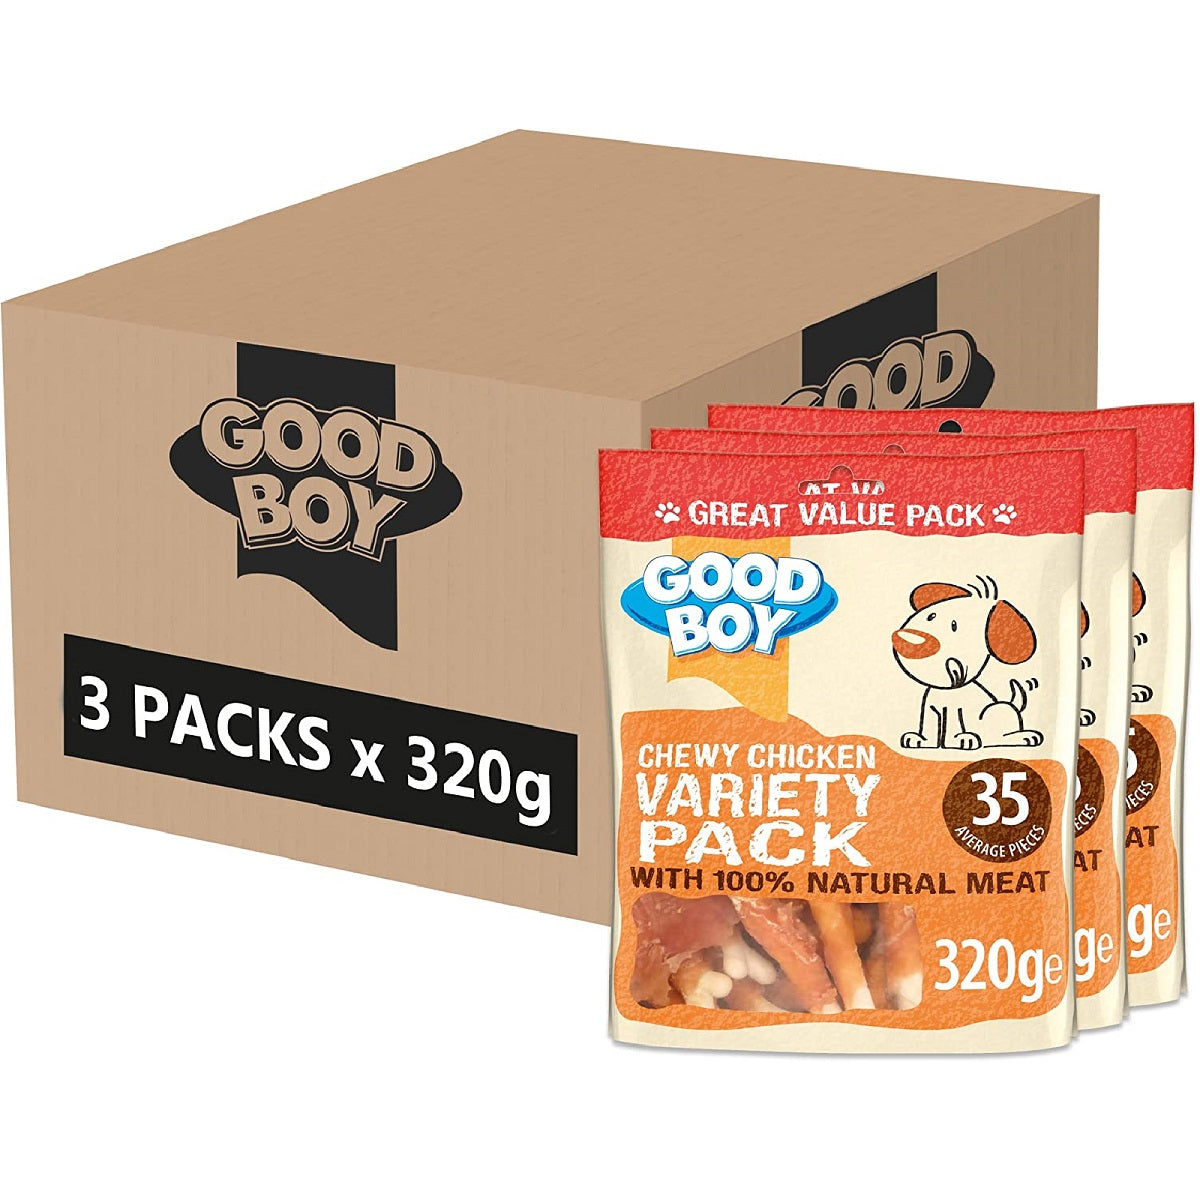 Good Boy - Chewy Chicken Variety Pack (320g)